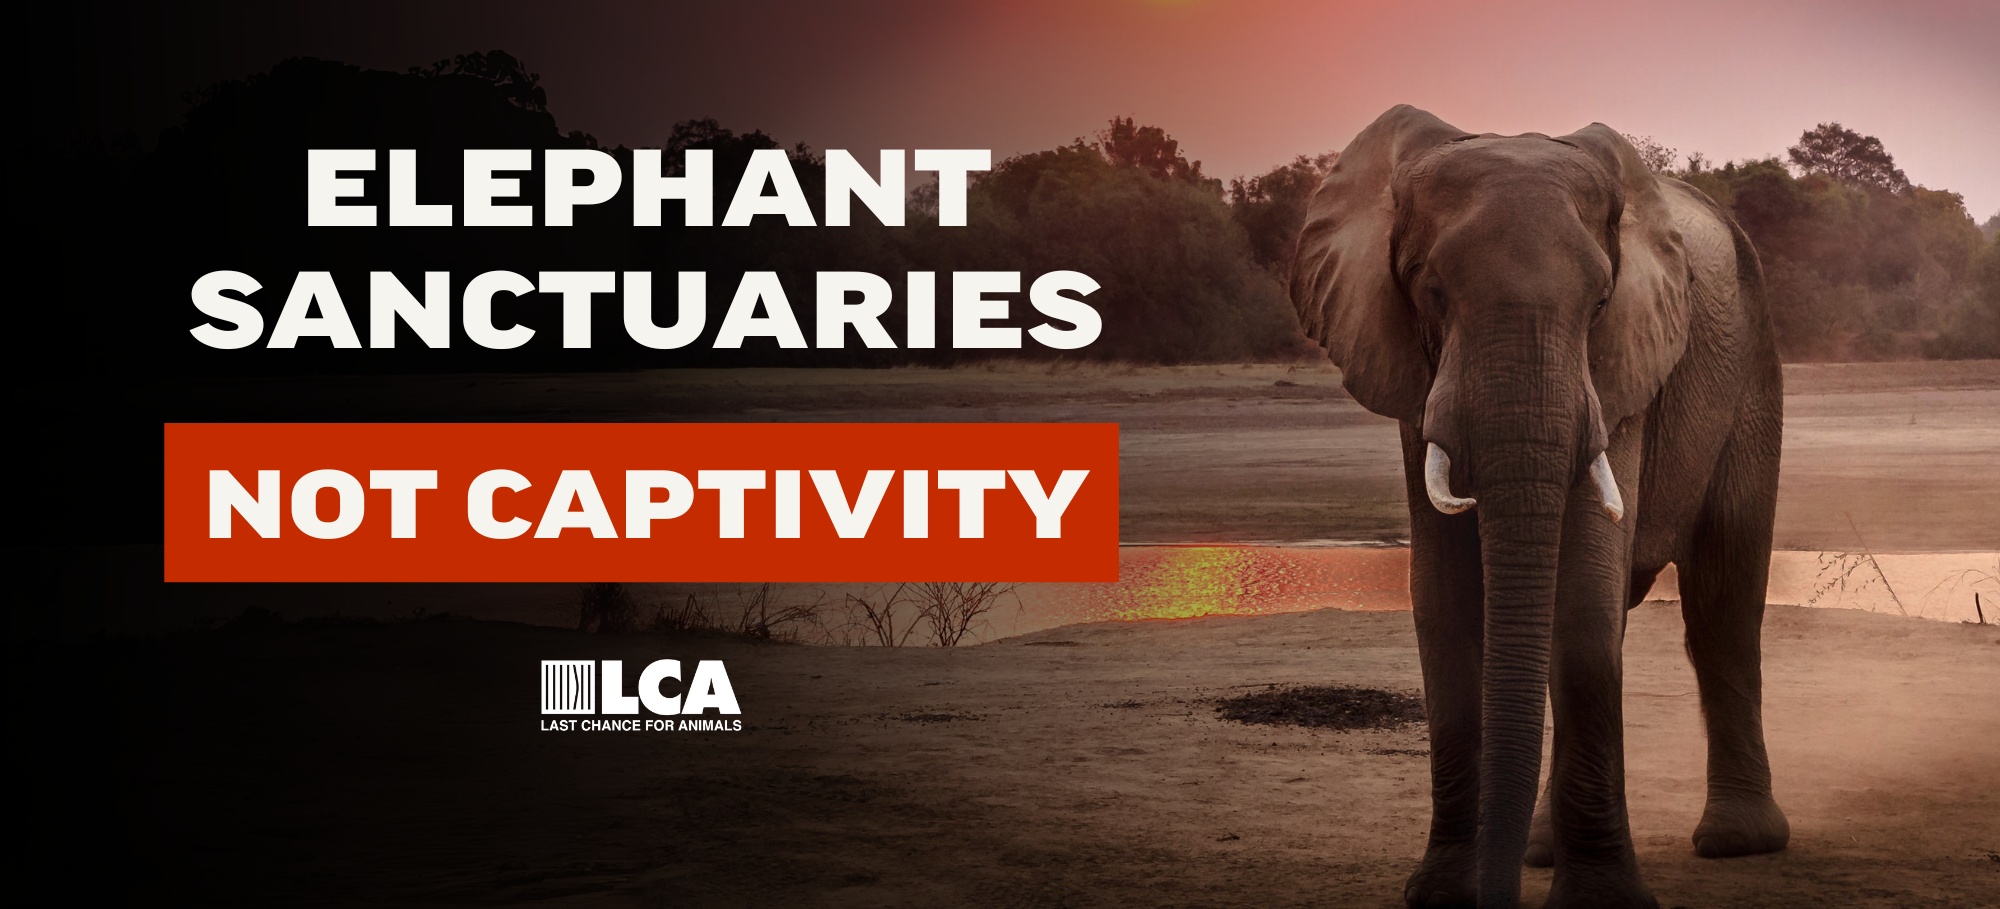 elephant sanctuaries not captivity